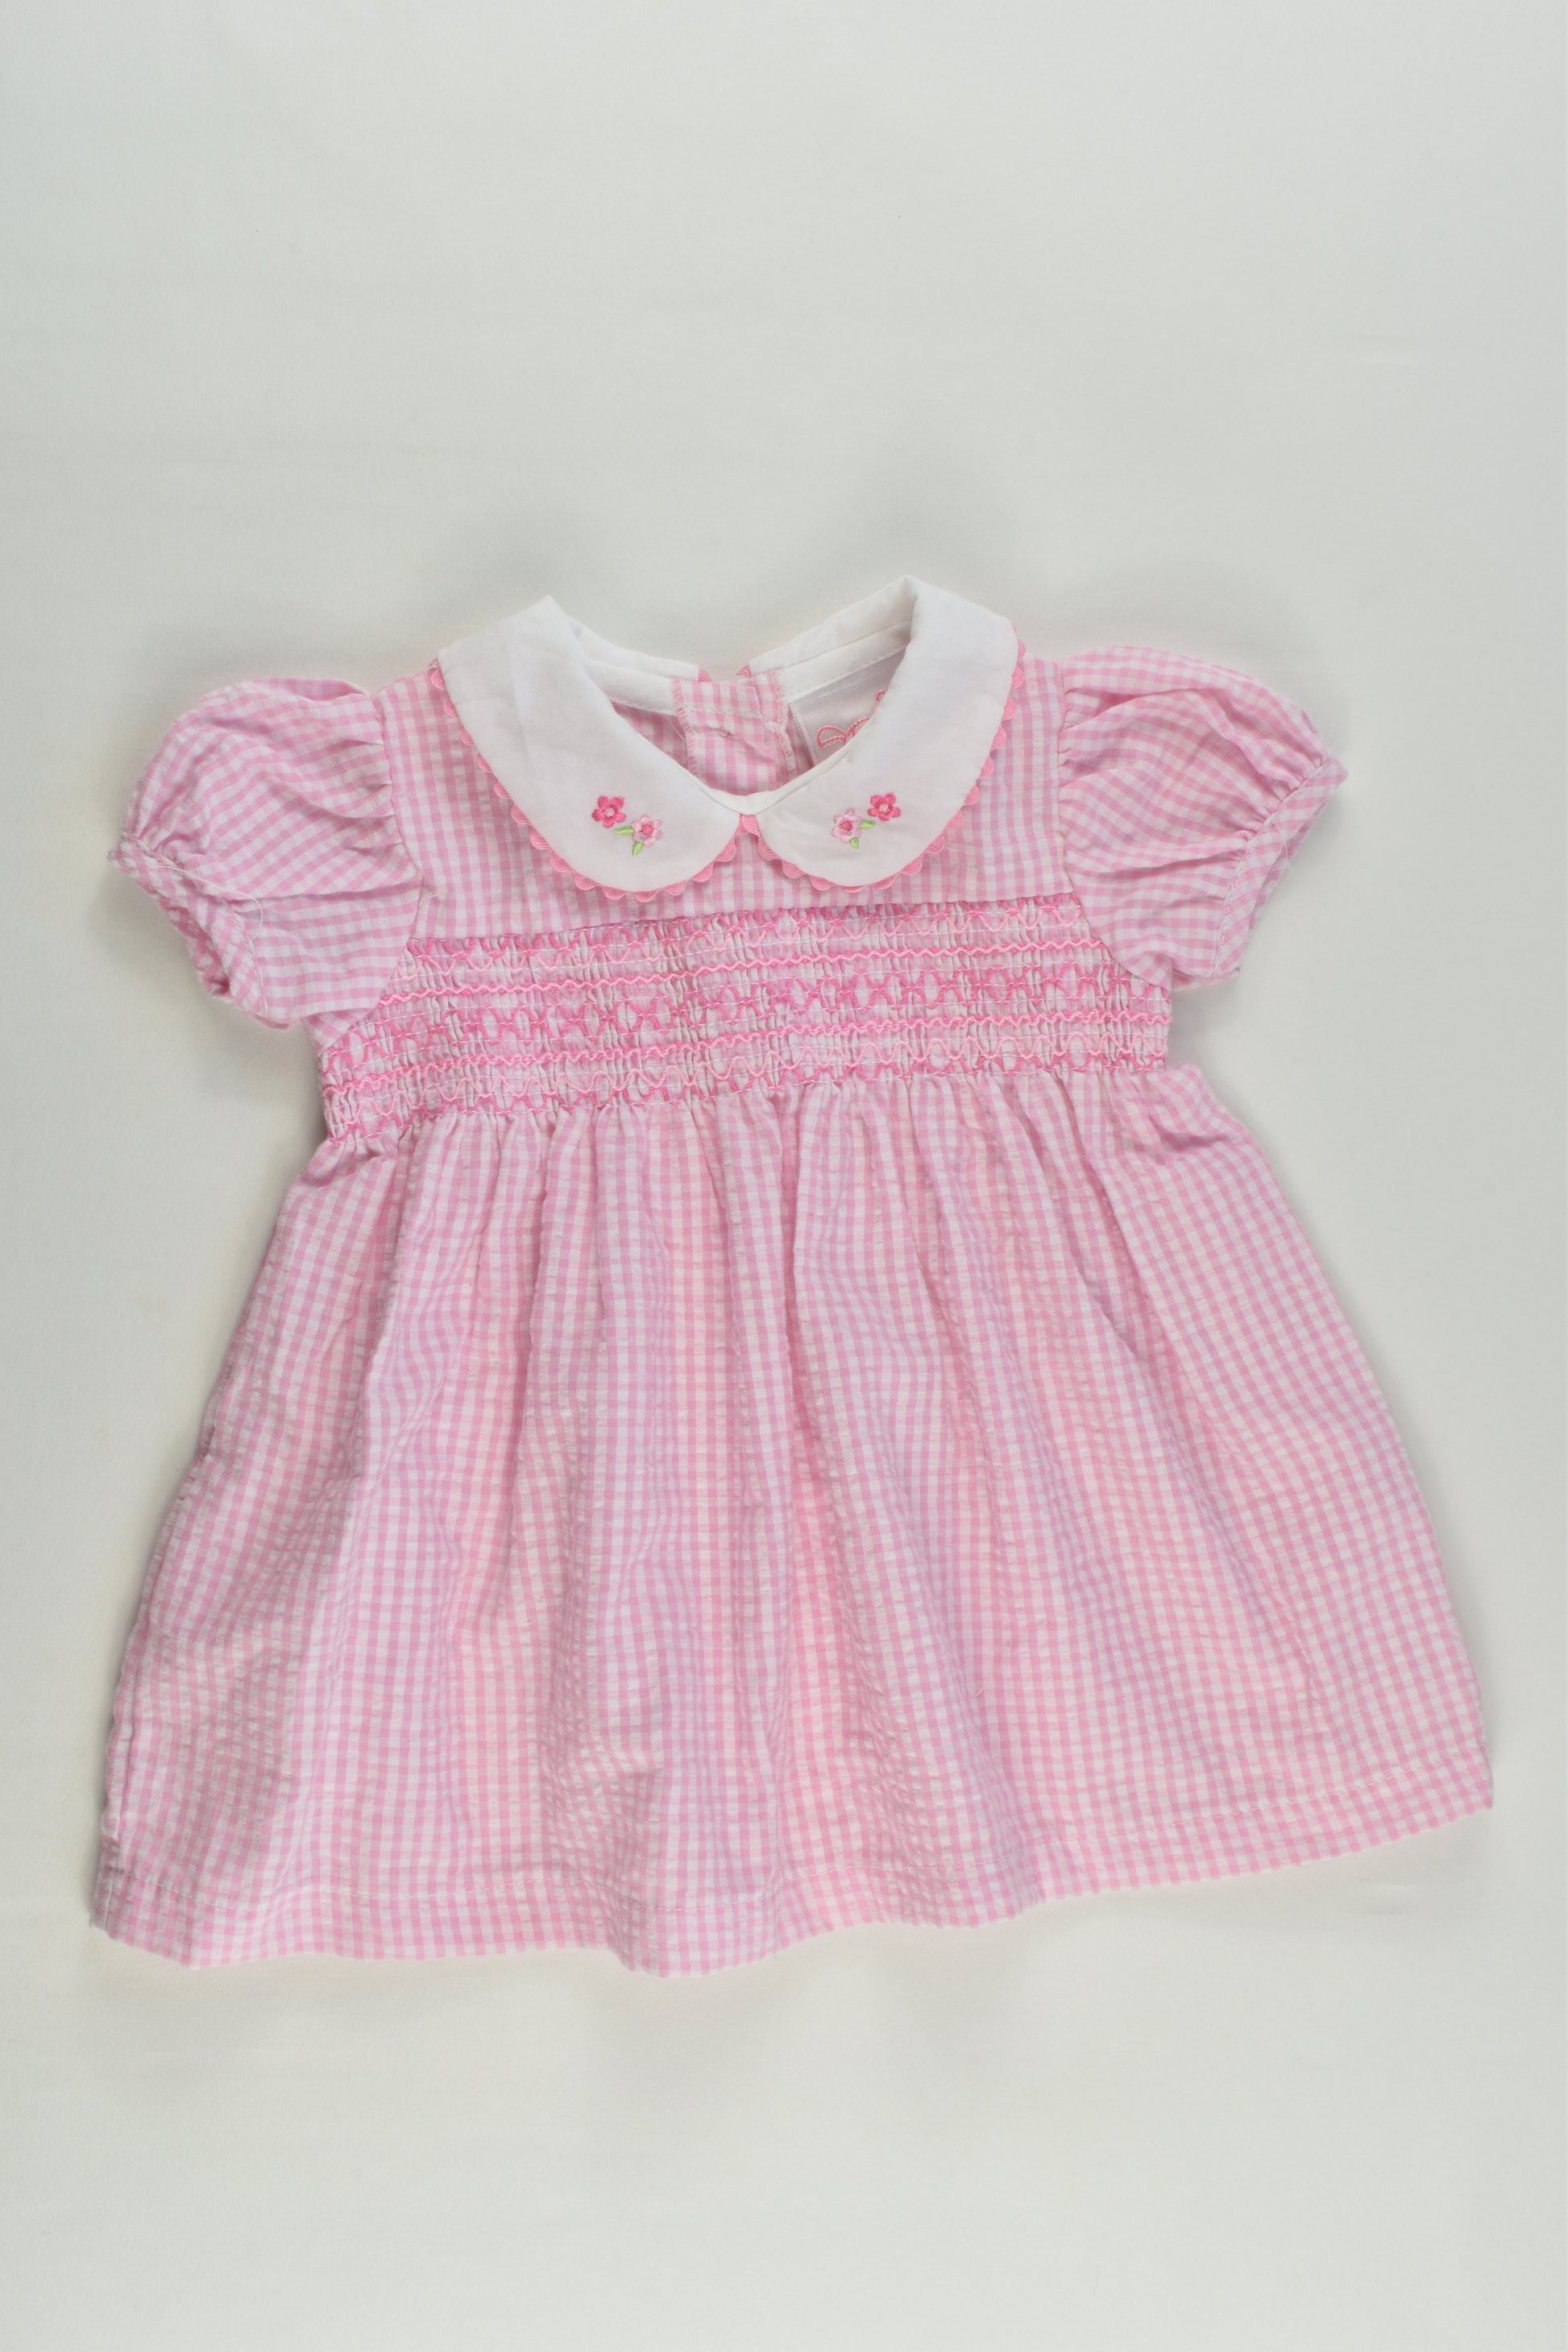 Rock A Bye Baby Size 00 (3/6 months) Smocked Dress